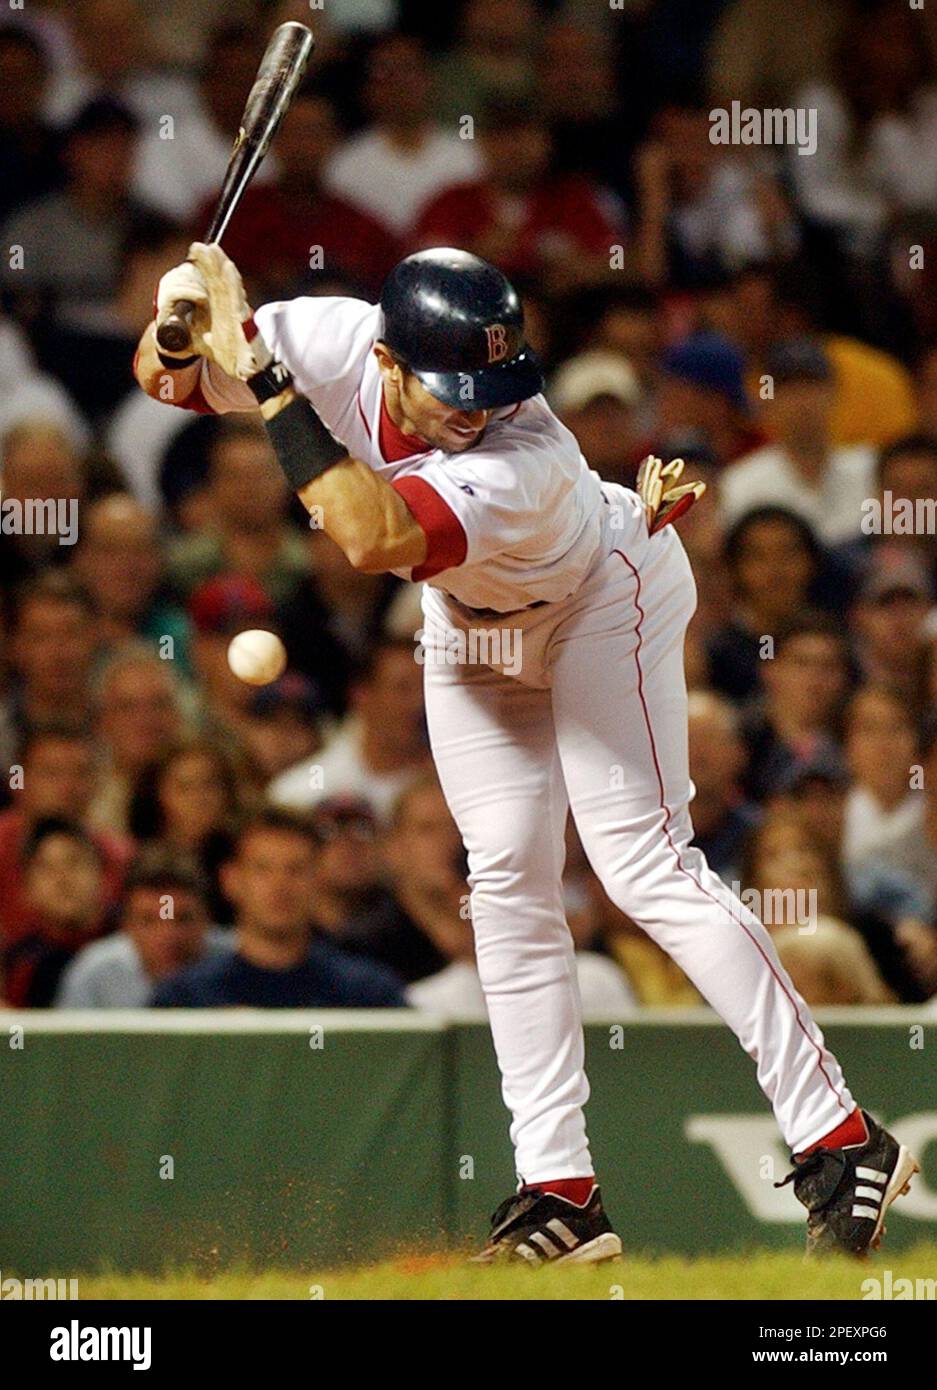 Brandon Phillips - Boston Red Sox Second Baseman - ESPN